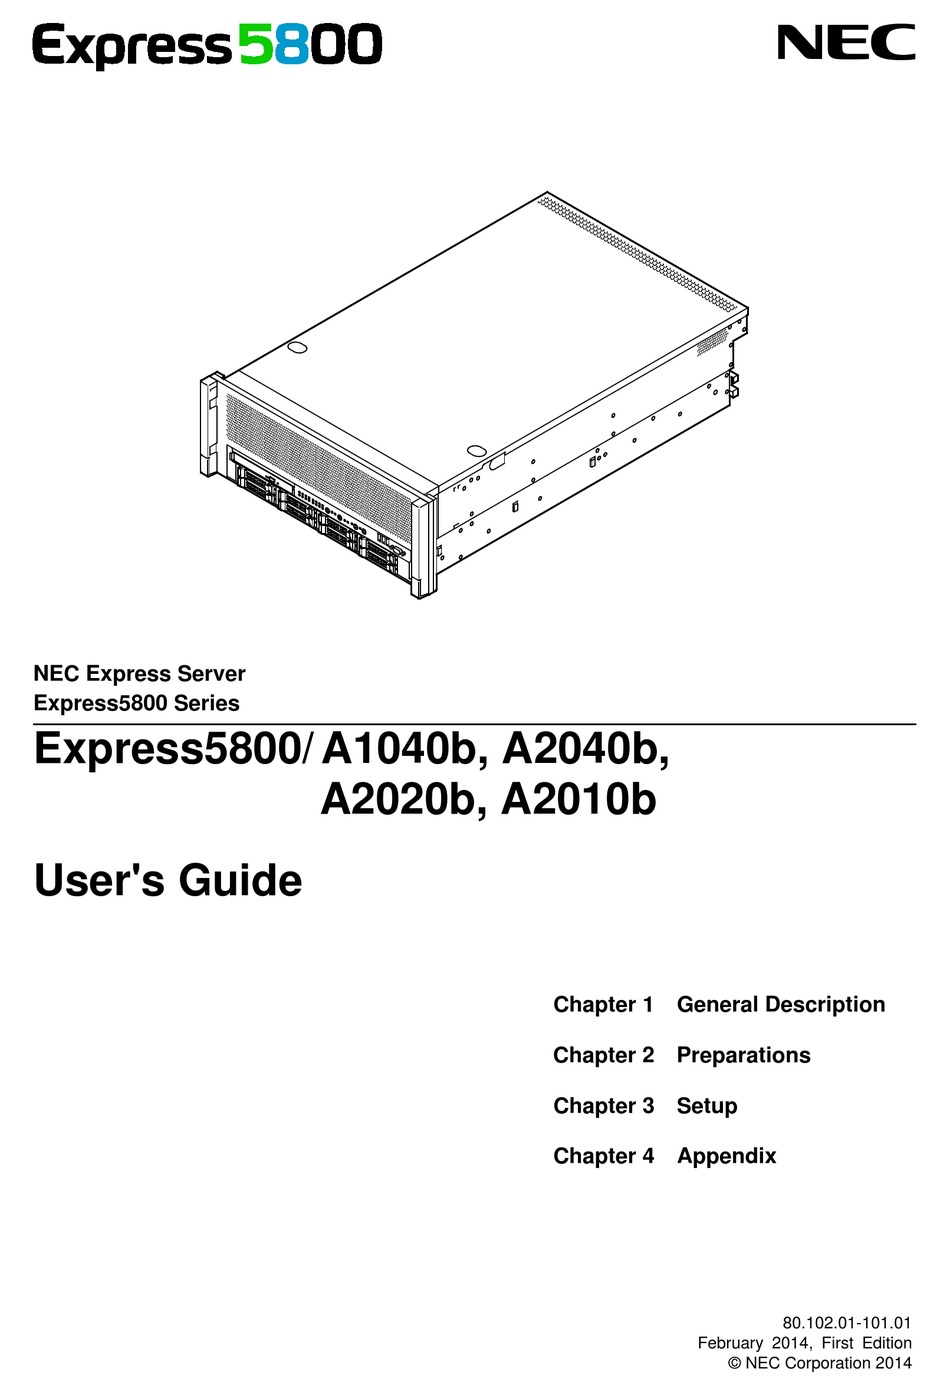 NEC EXPRESS5800 A2010B USER MANUAL Pdf Download | ManualsLib